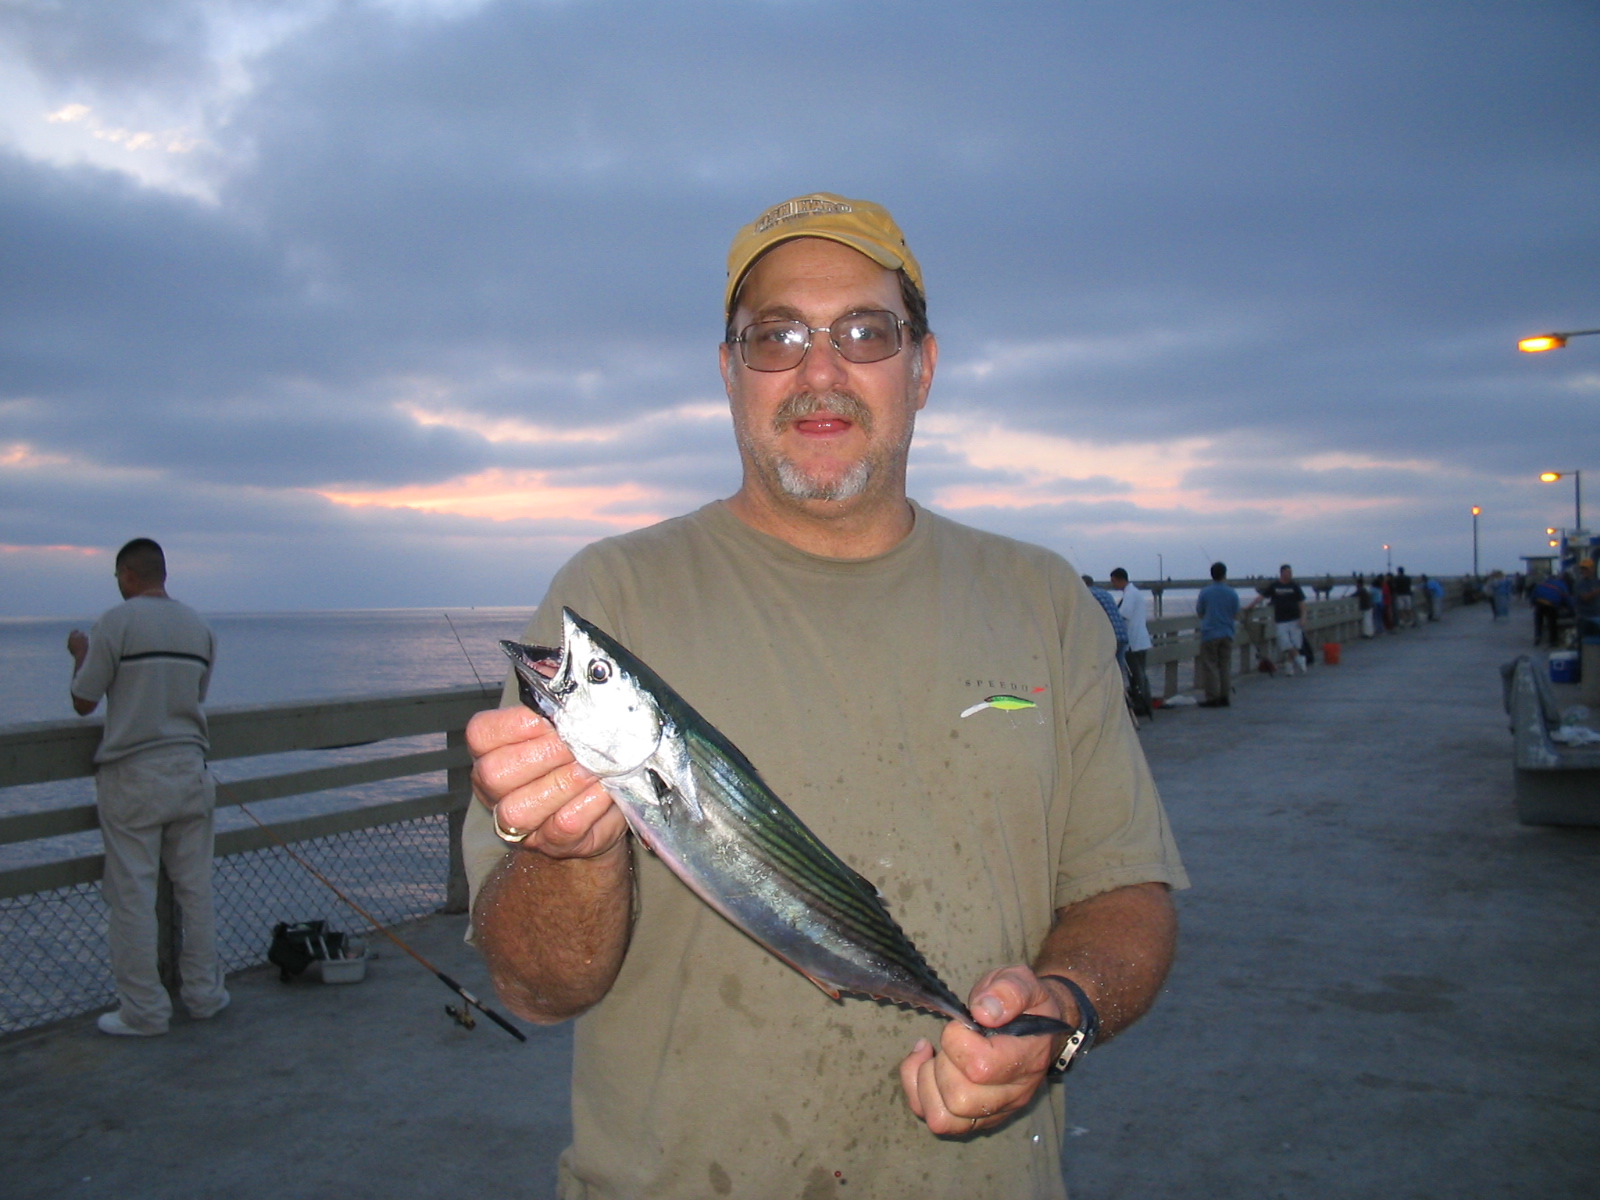 Embarcadero Marina Park Pier — San Diego - Pier Fishing in California